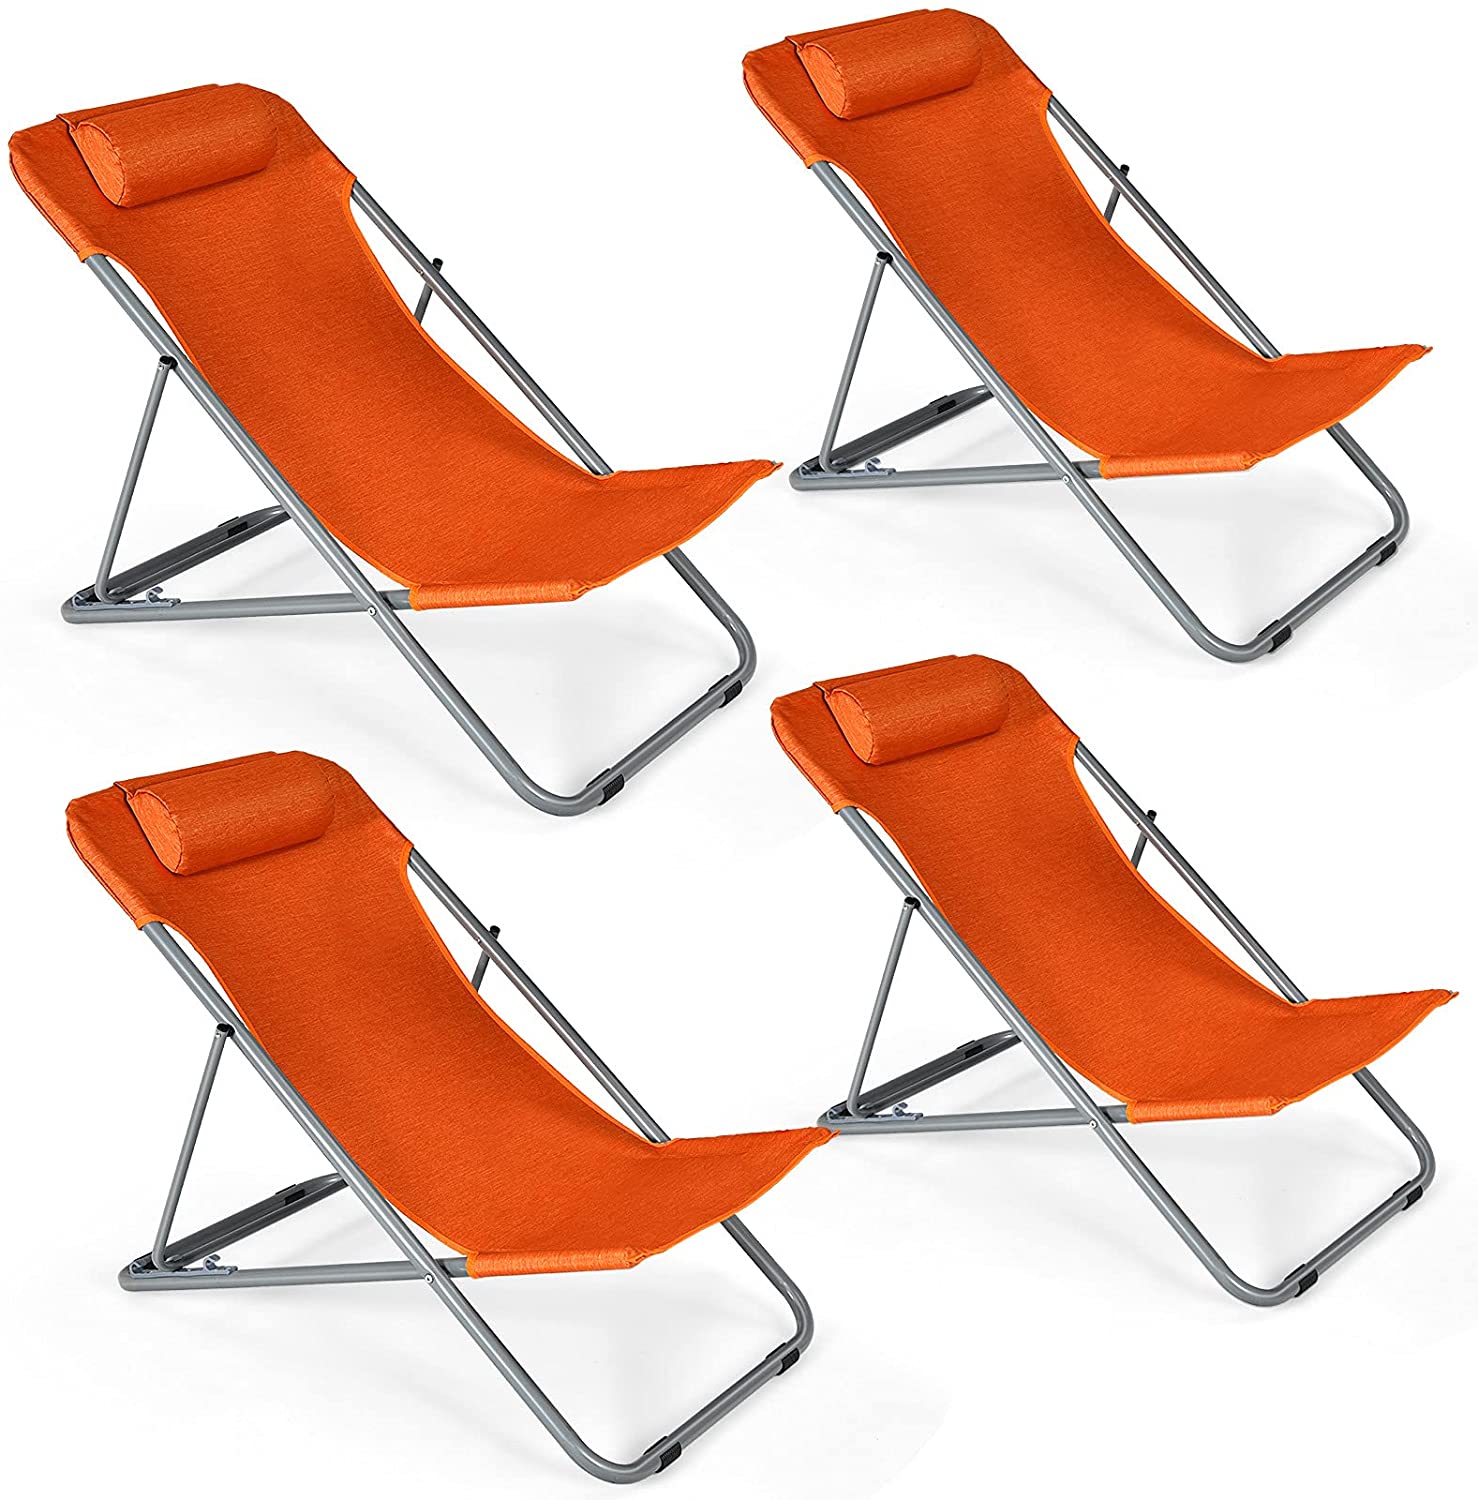 Giantex Beach Chair for Adults Camping Chair Set